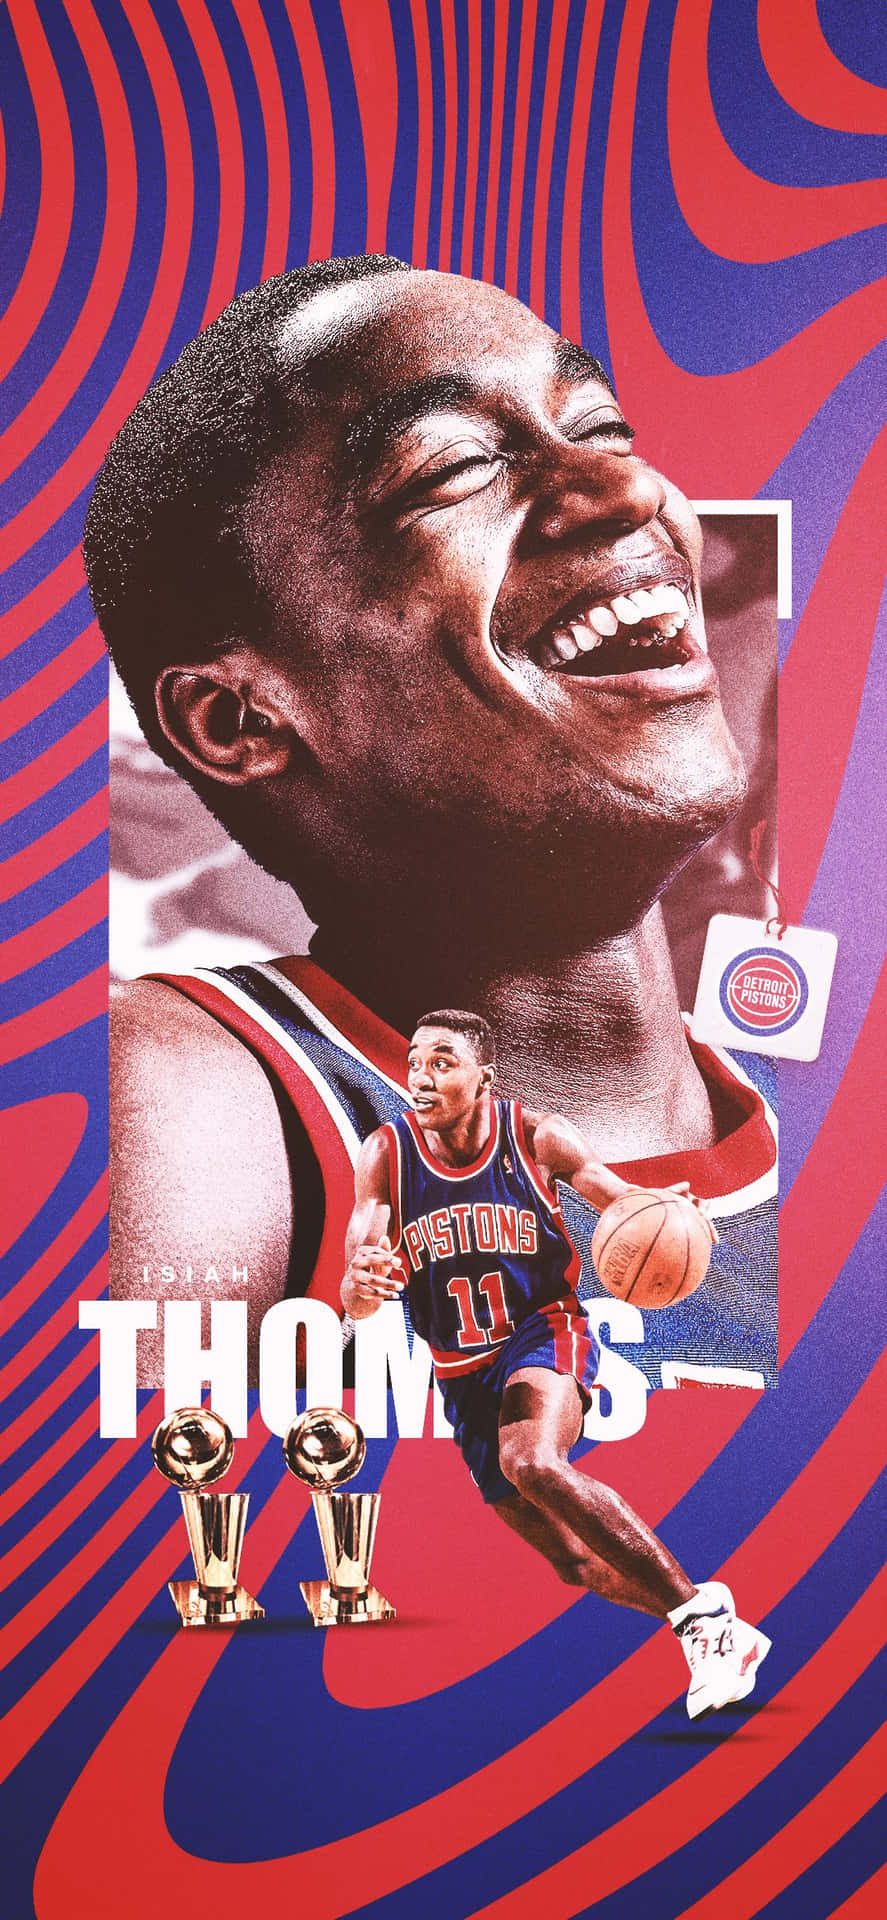 American Former Professional Basketball Player Isiah Thomas Poster Art Wallpaper